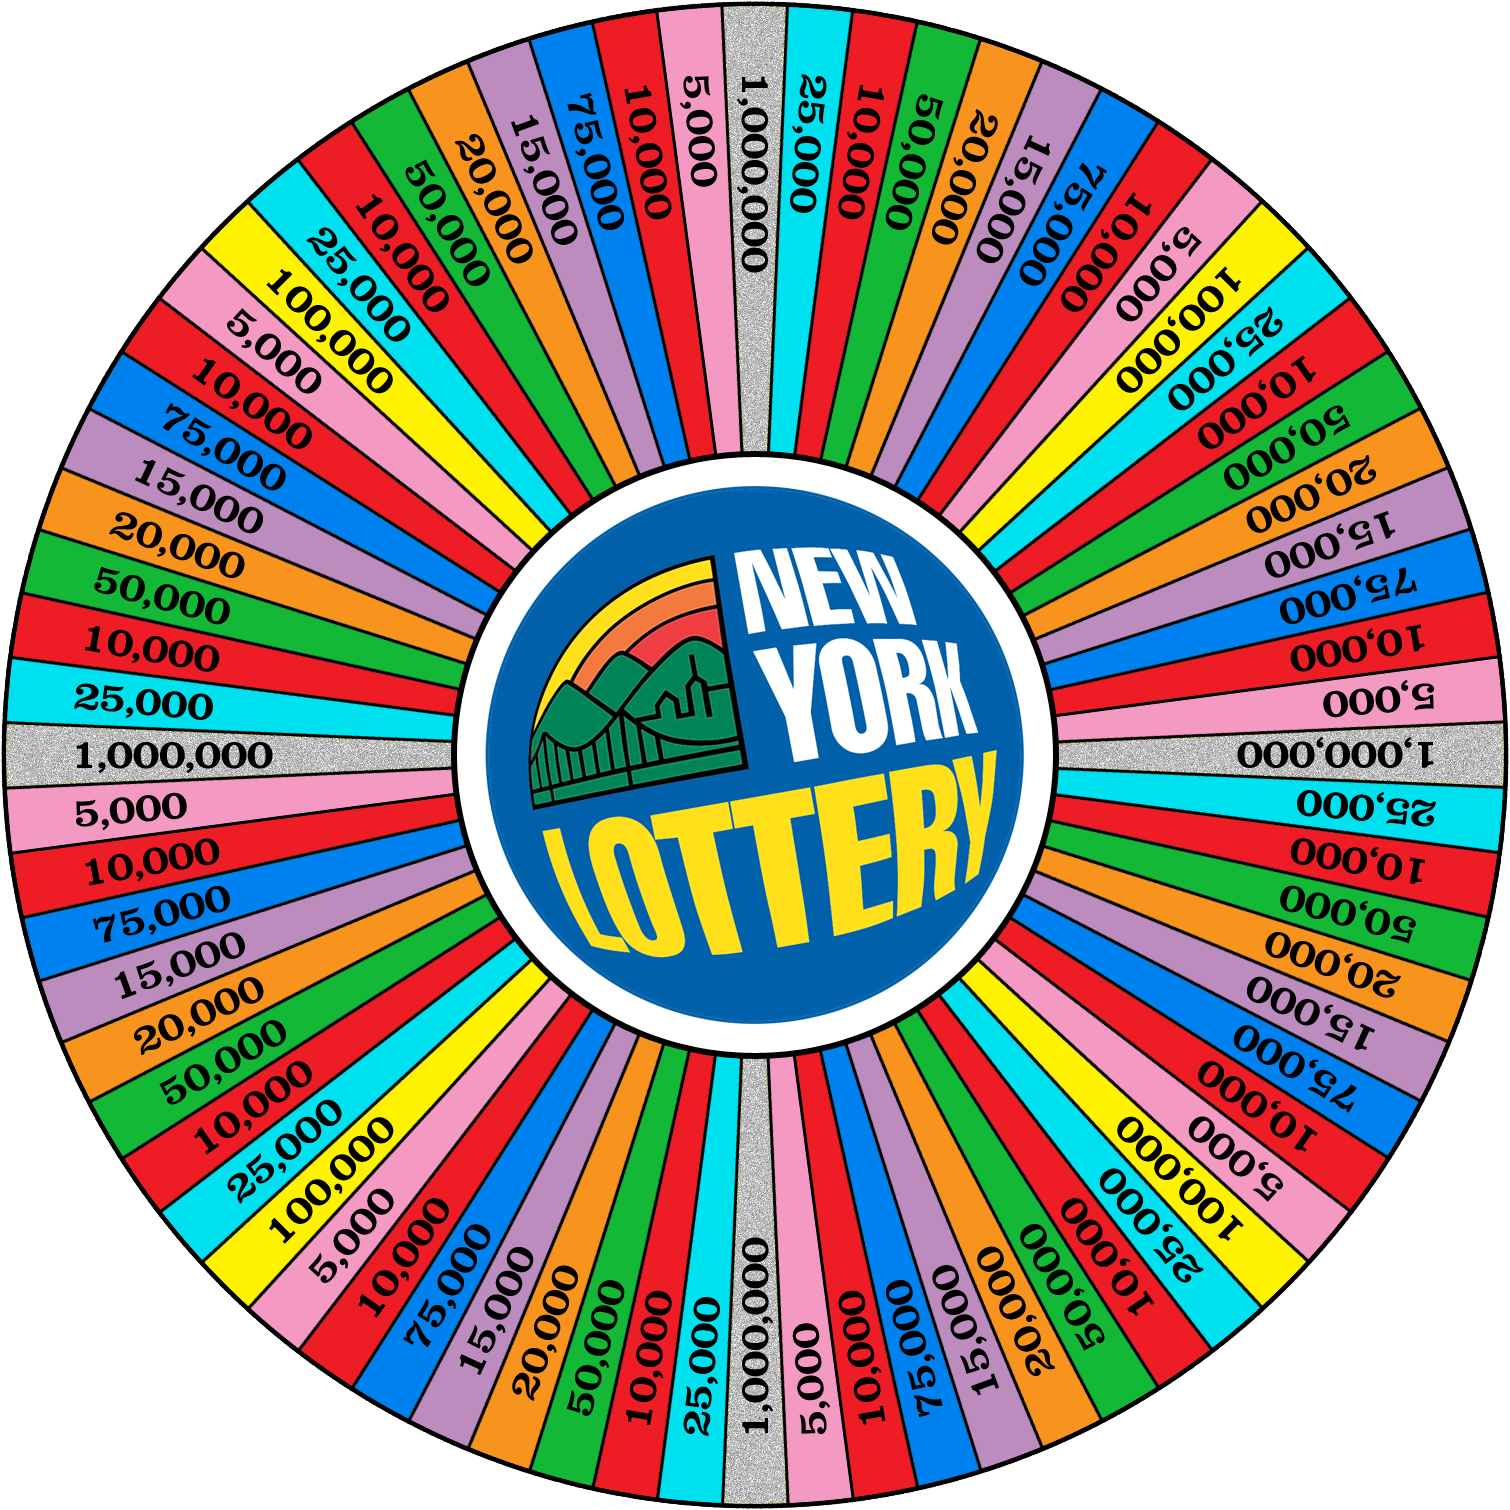 Ideal New York Lottery wheel by wheelgenius on DeviantArt